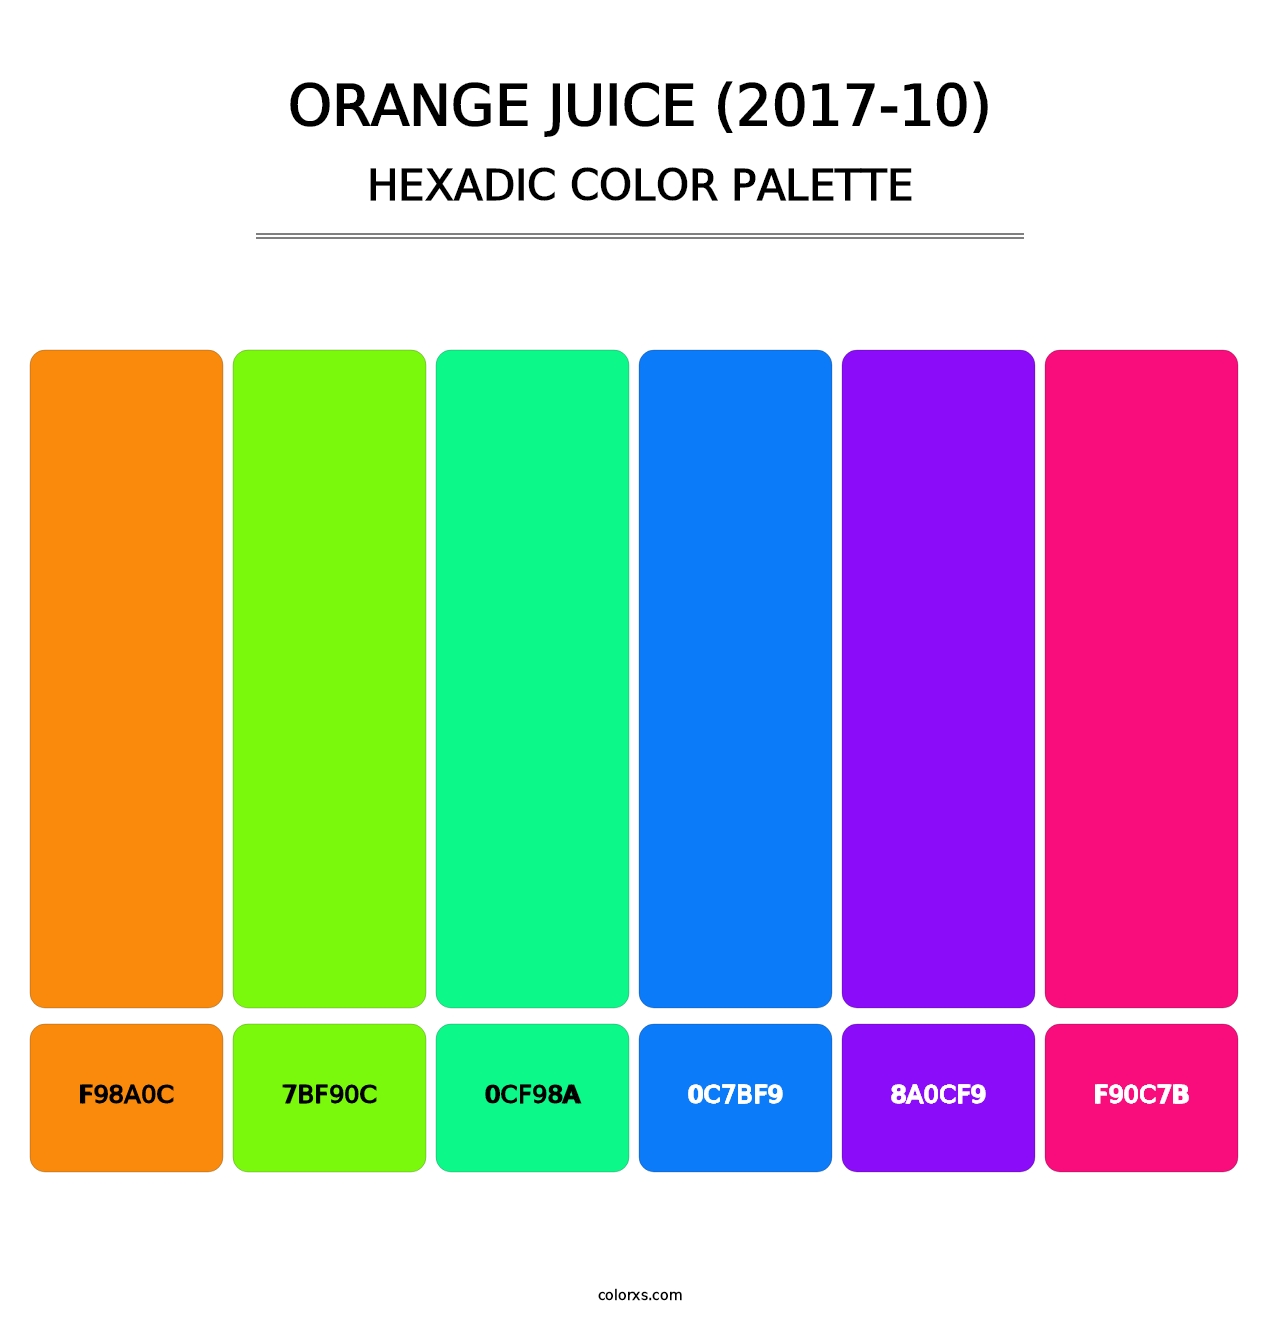 Orange Juice (2017-10) - Hexadic Color Palette